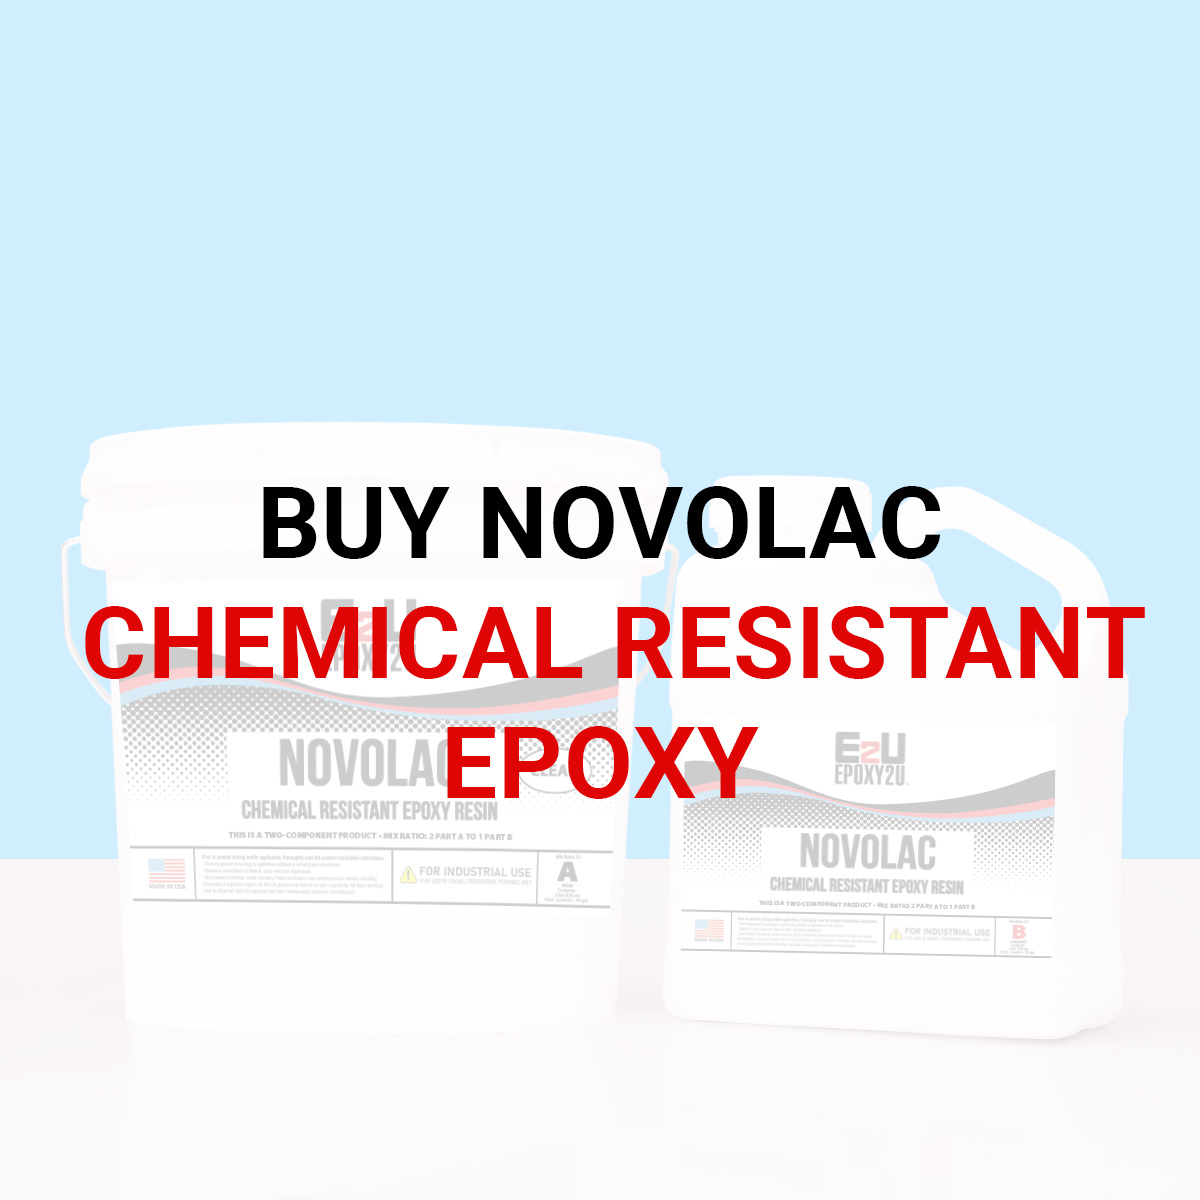 NOVOLAC CHEMICAL RESISTANT EPOXY